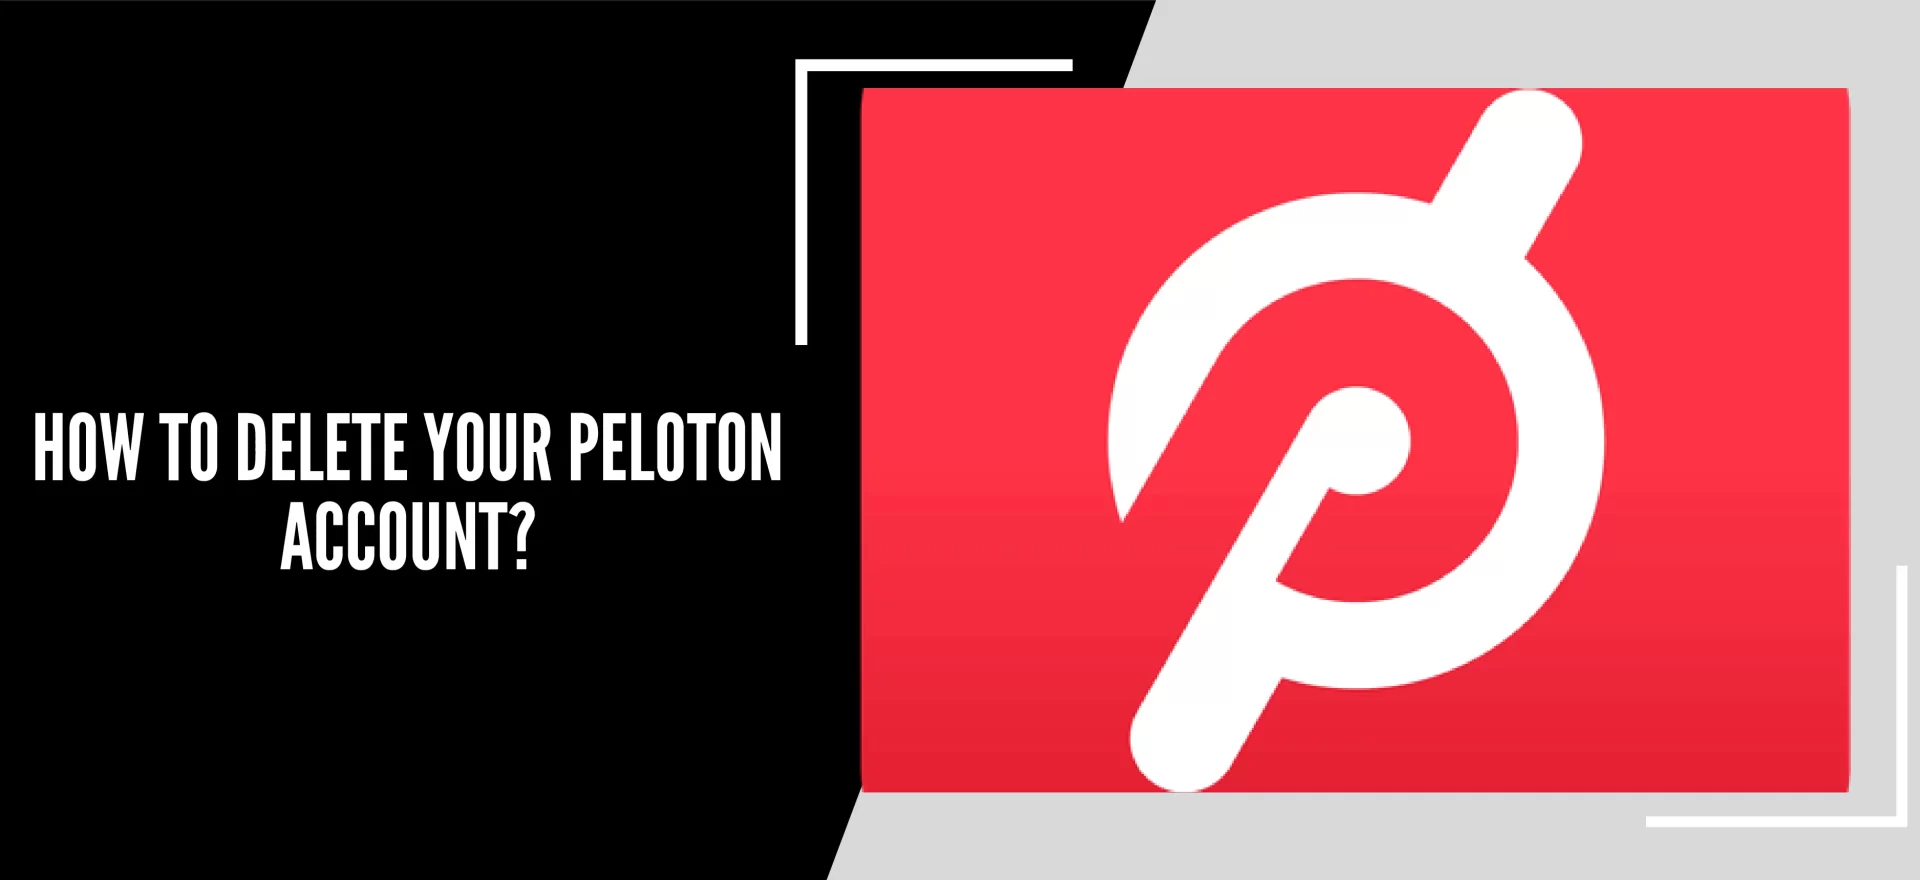 How To Delete Your Peloton Account